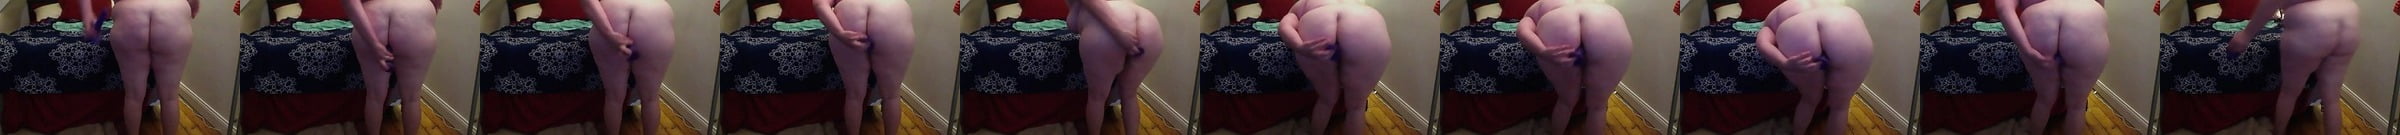 Amy L Hot Fat Slut Fucking Her Ass W Big Dildo Porn 99 XHamster